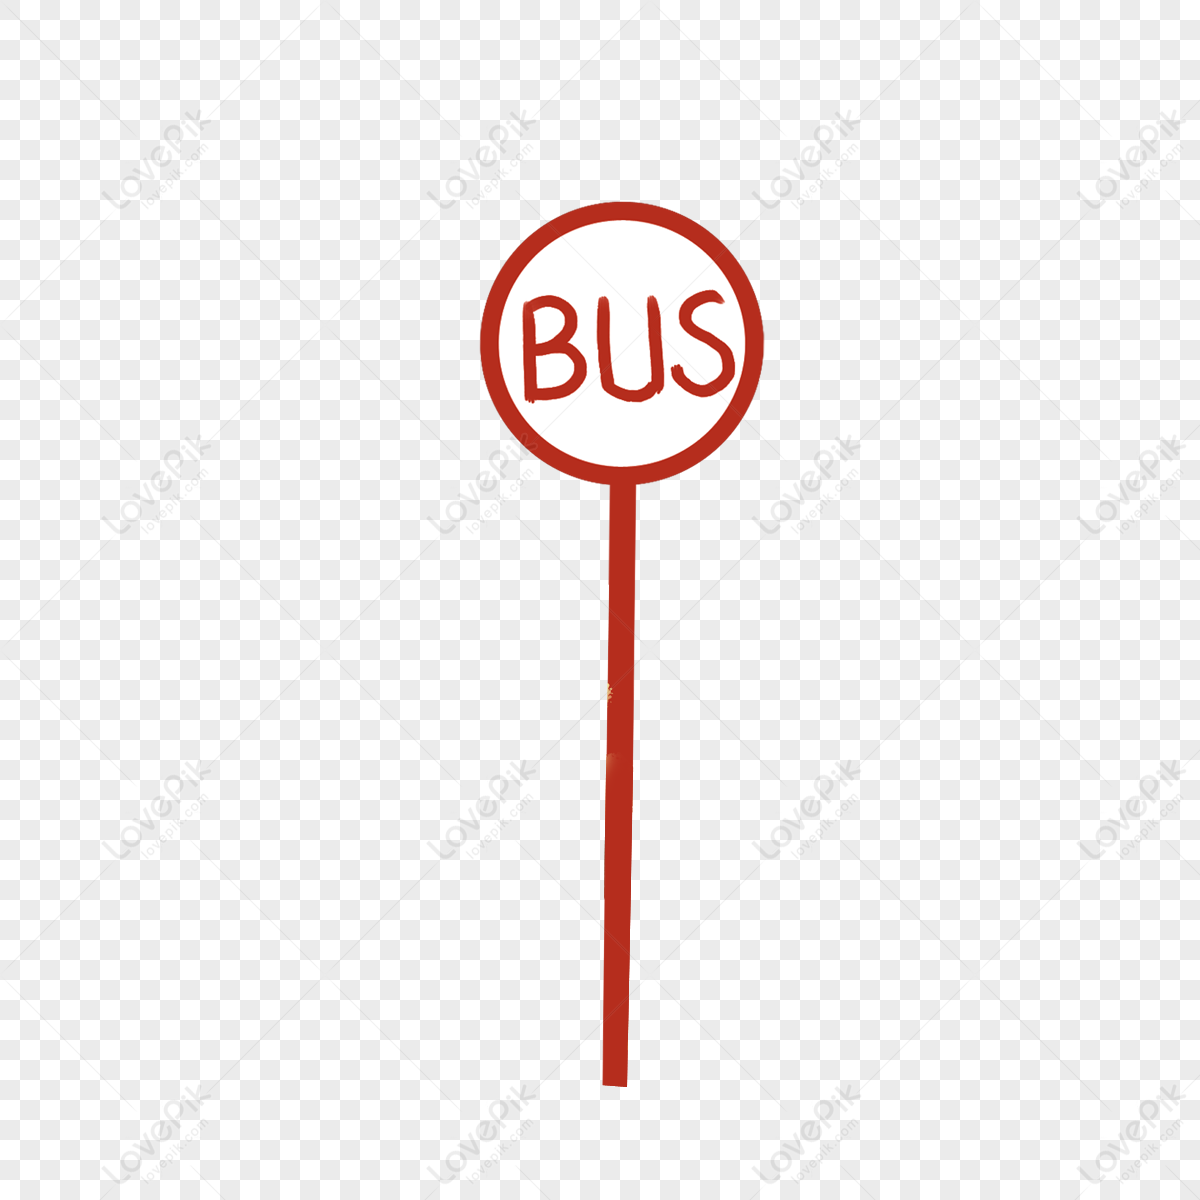 bus stop symbol png